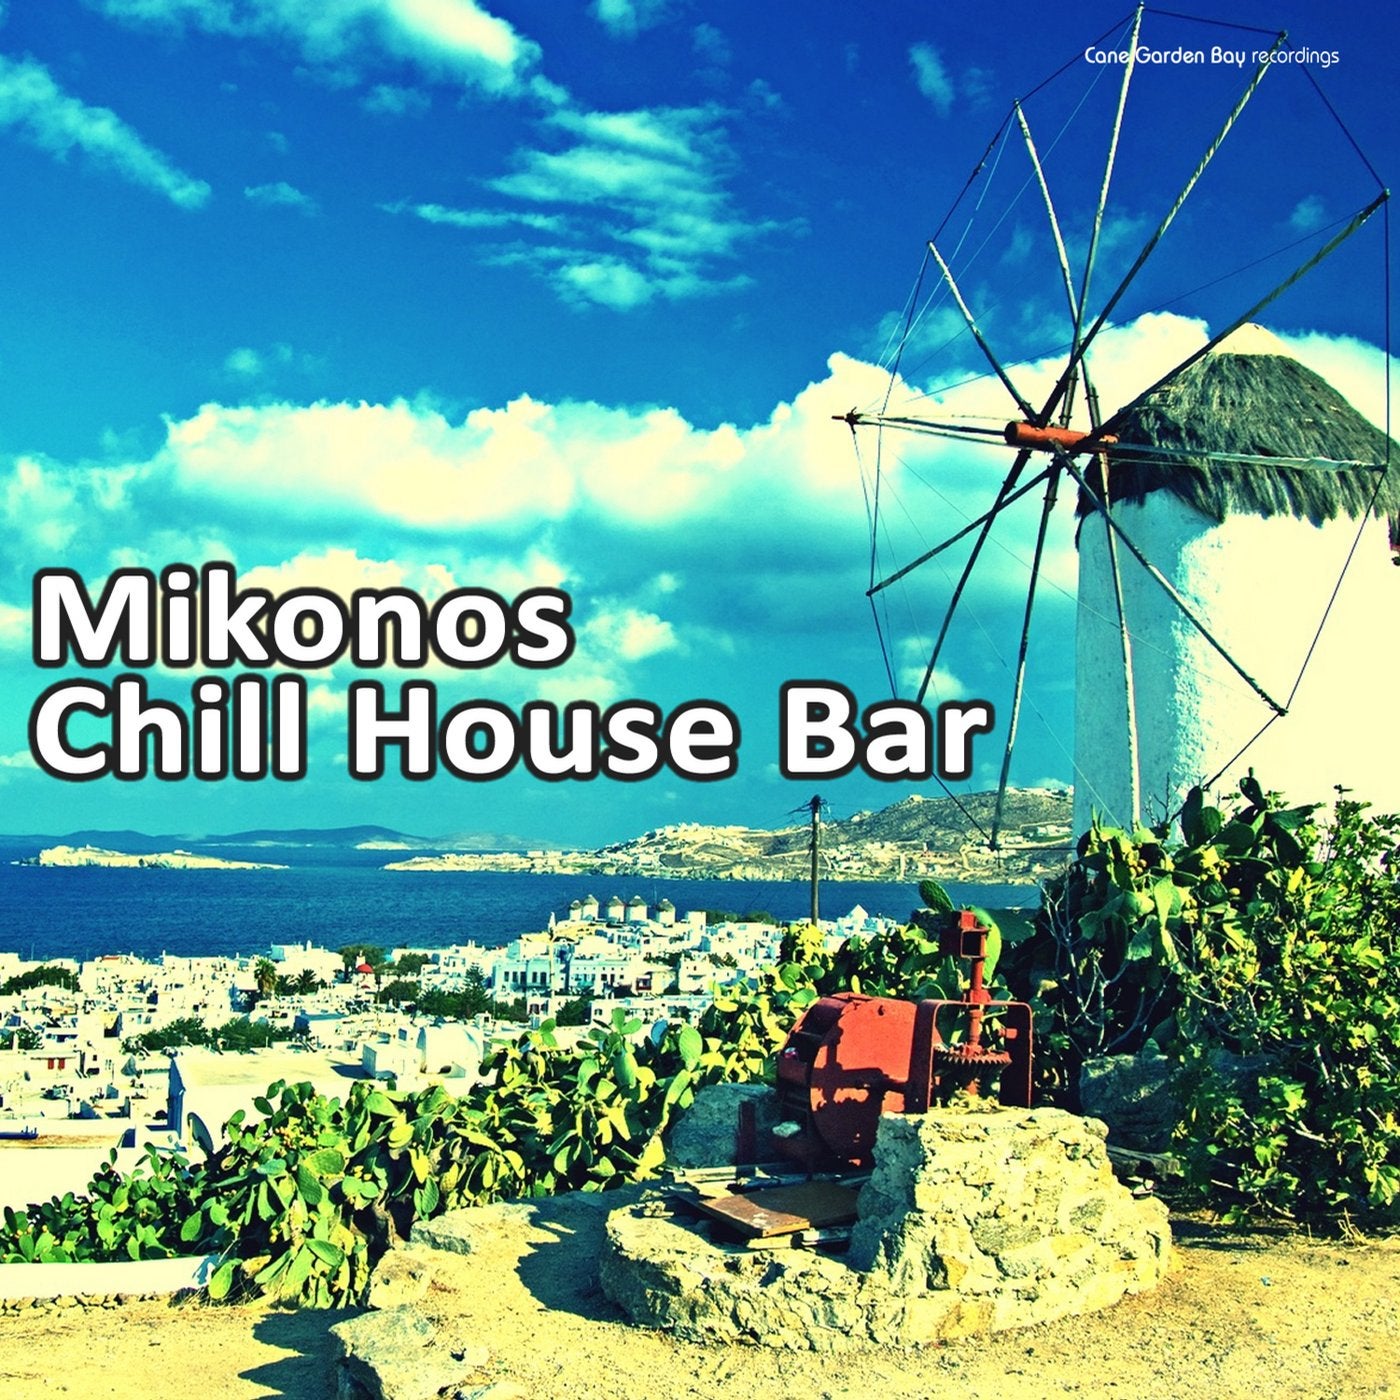 Mikonos Chill House Bar